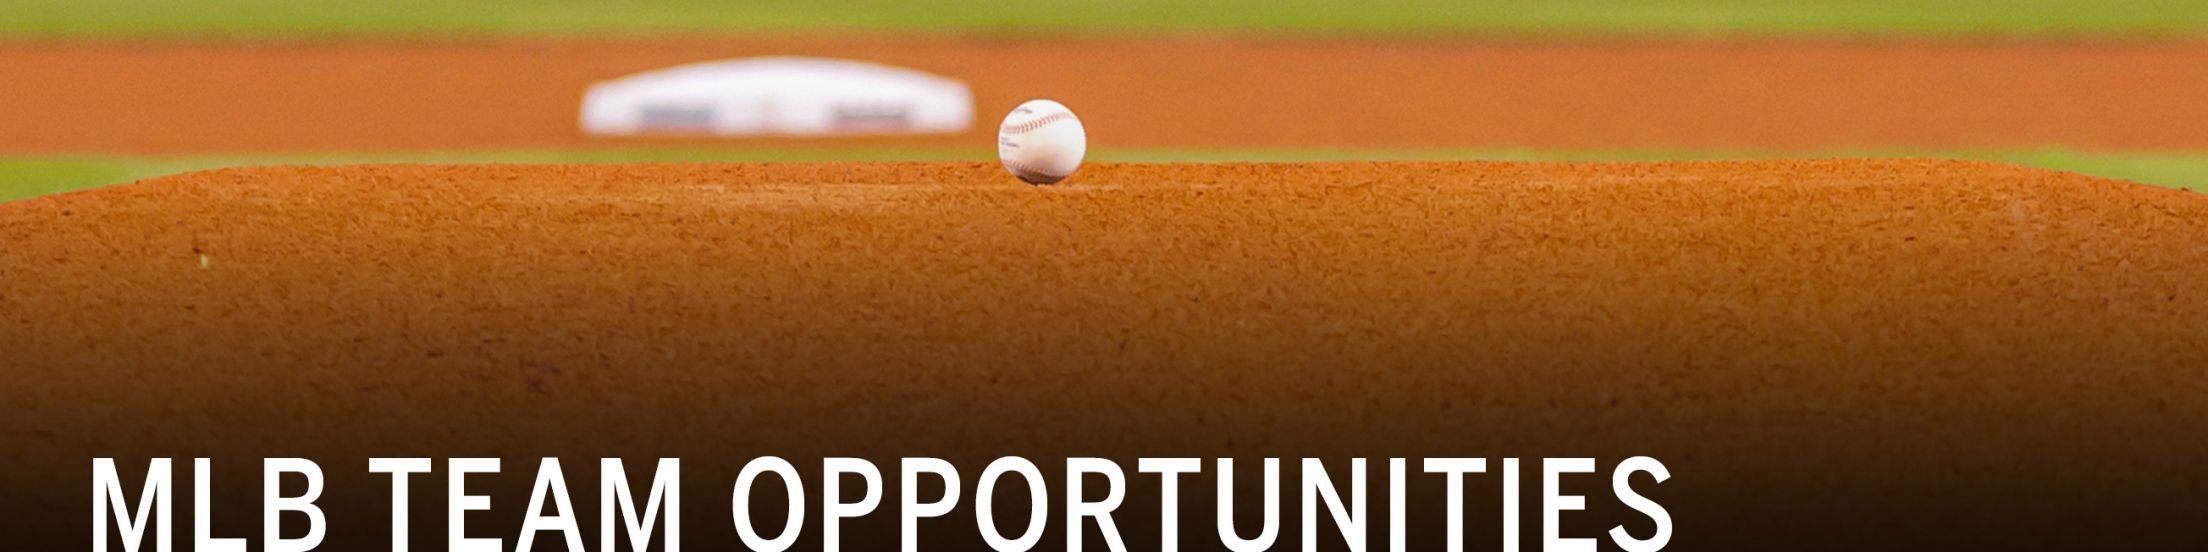 MLB Team Opportunities, Careers